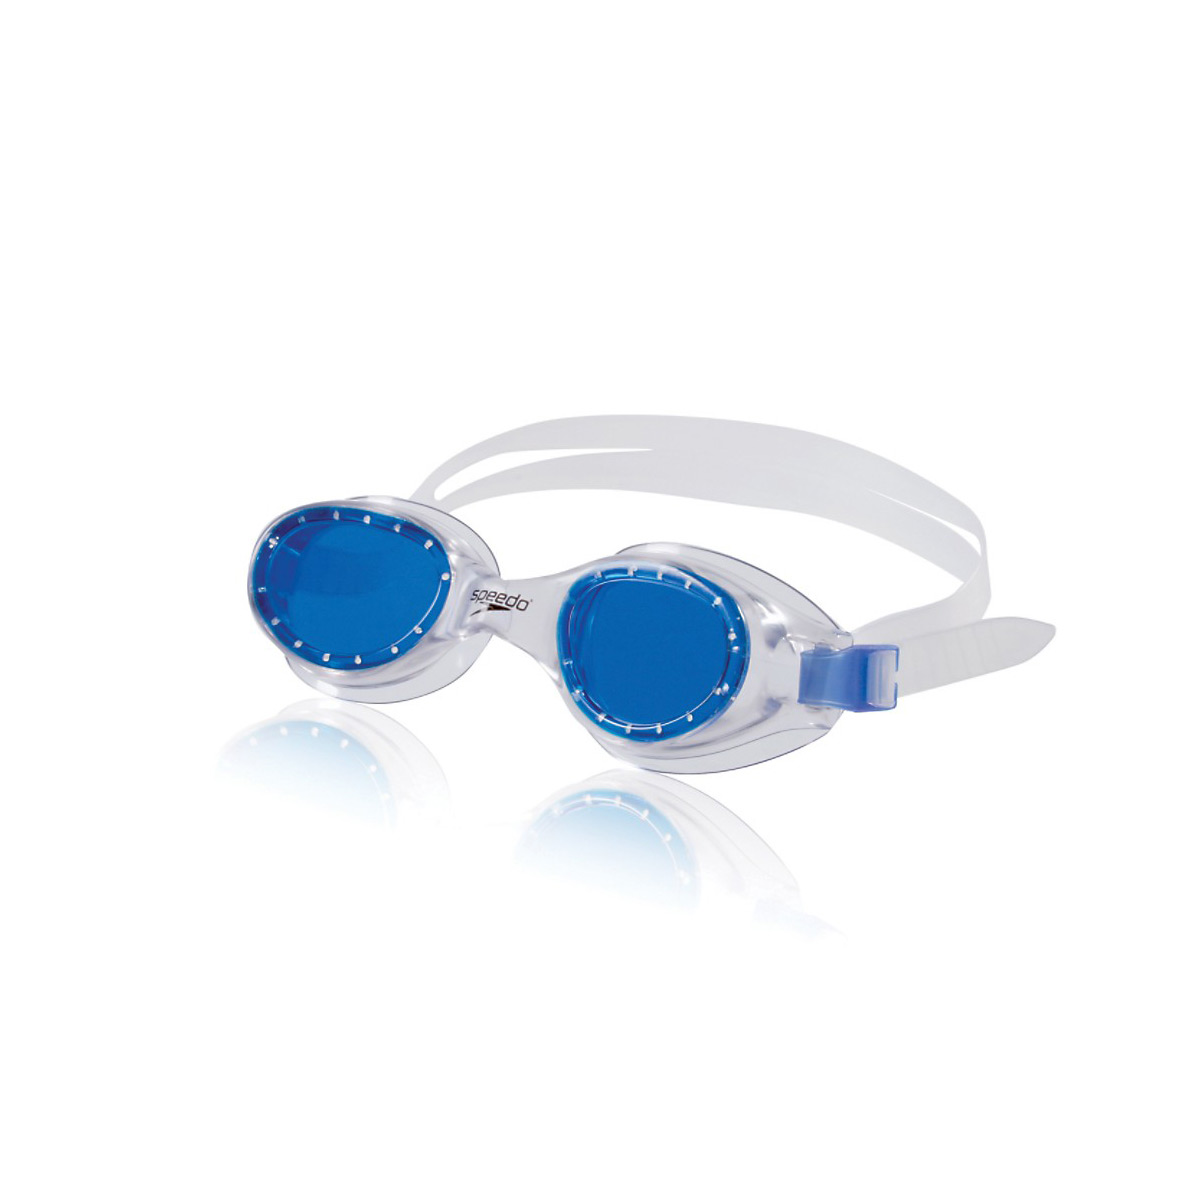 Speedo Hydrospex Classic Goggles - Clear/Blue